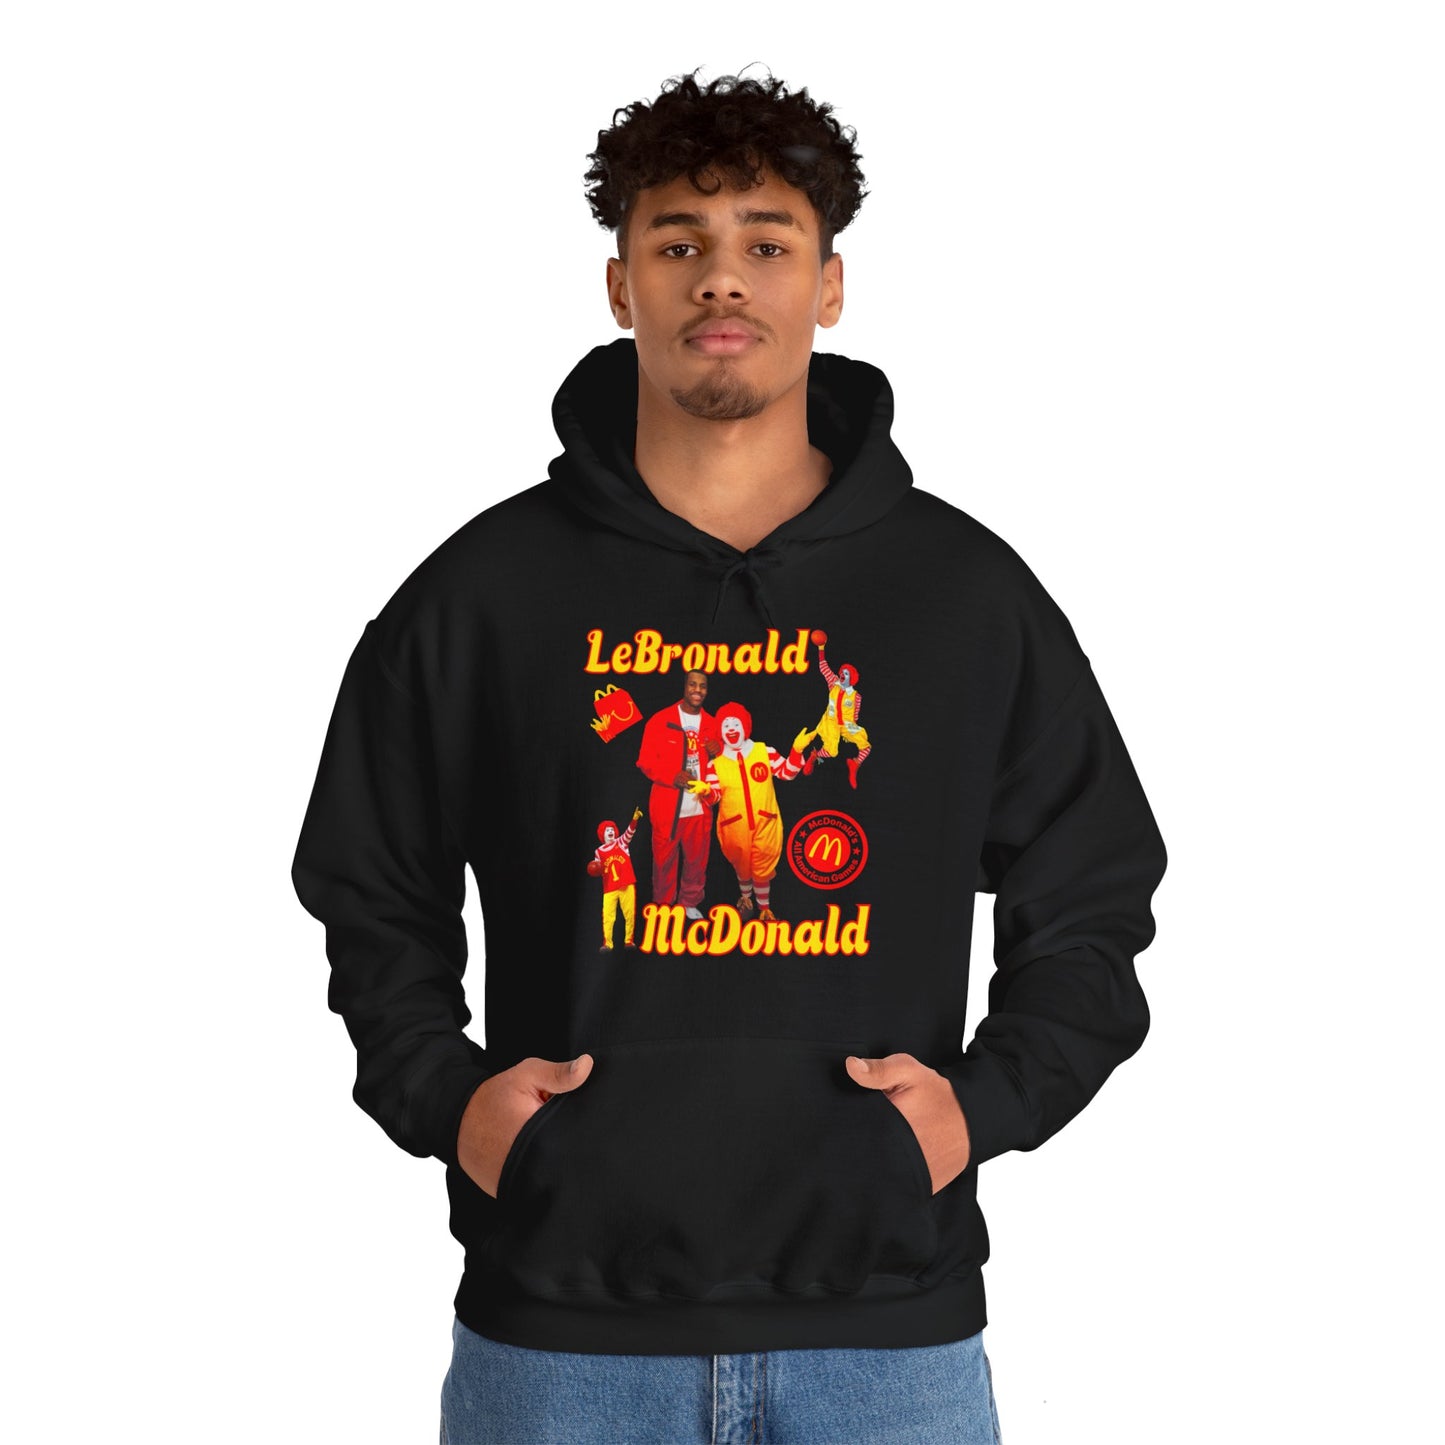 LeBronald McDonald